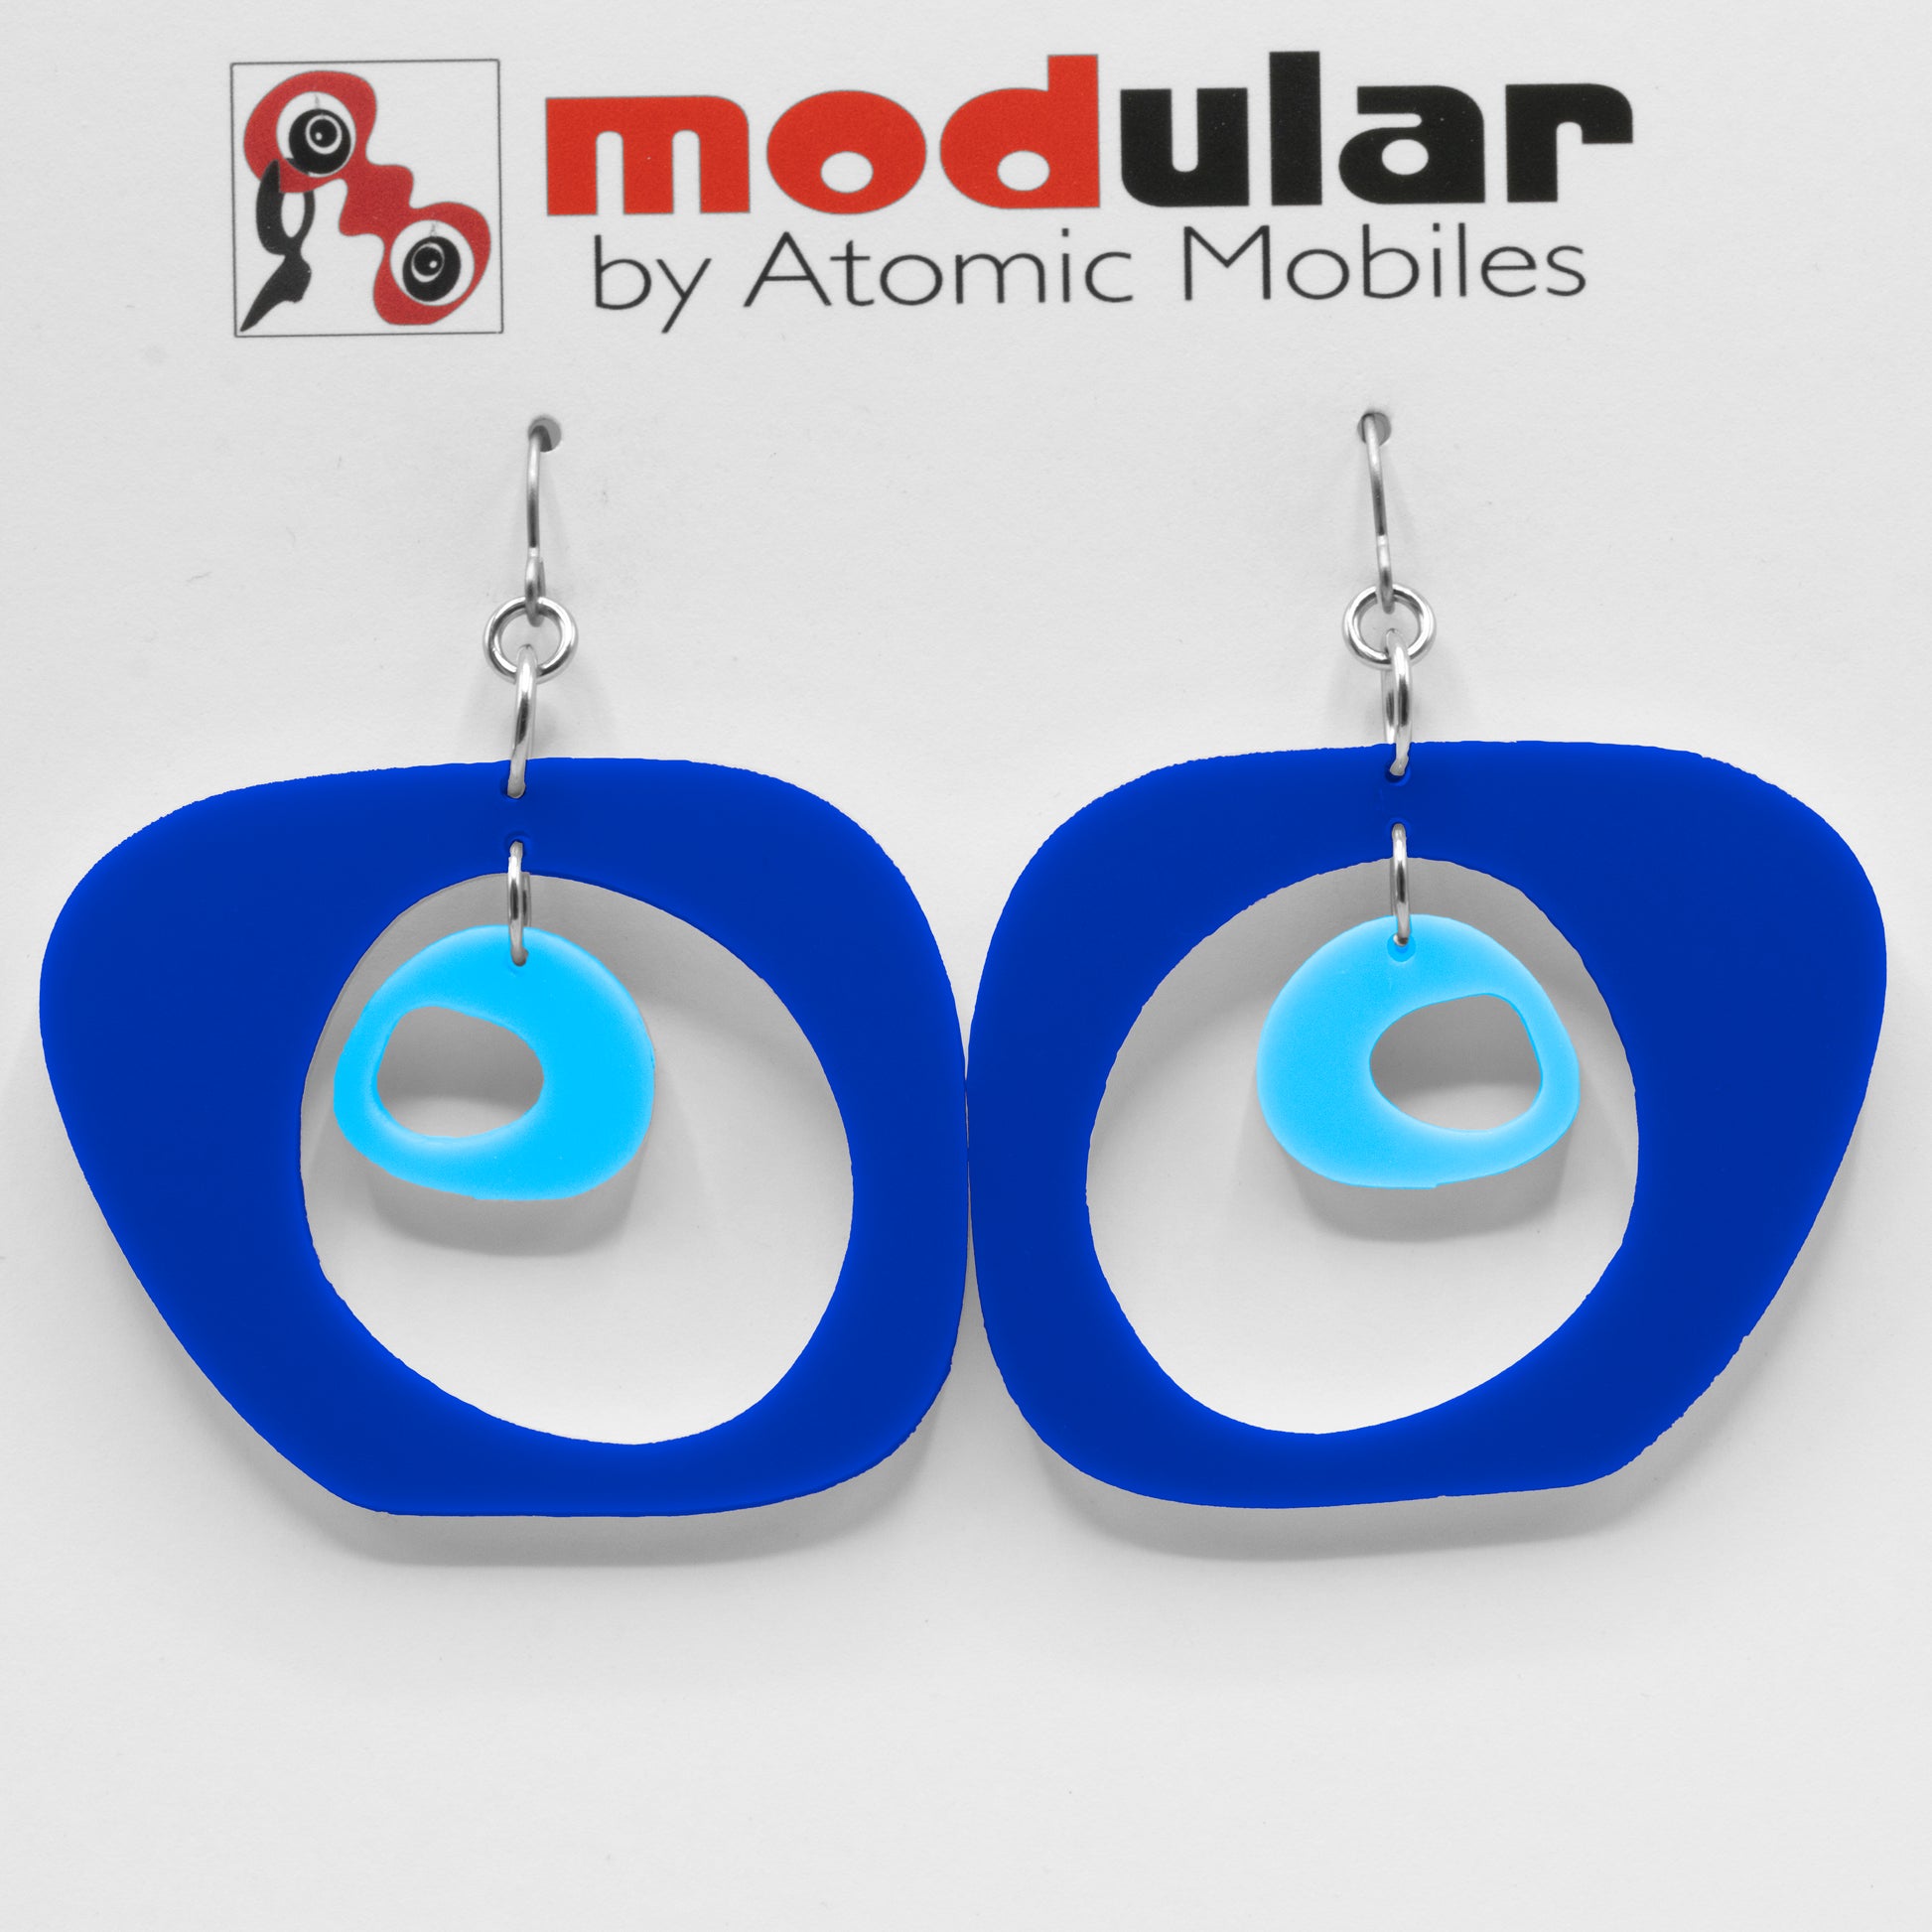 MODular Earrings - Paris Statement Earrings in Navy Blue by AtomicMobiles.com - retro era inspired mod handmade jewelry